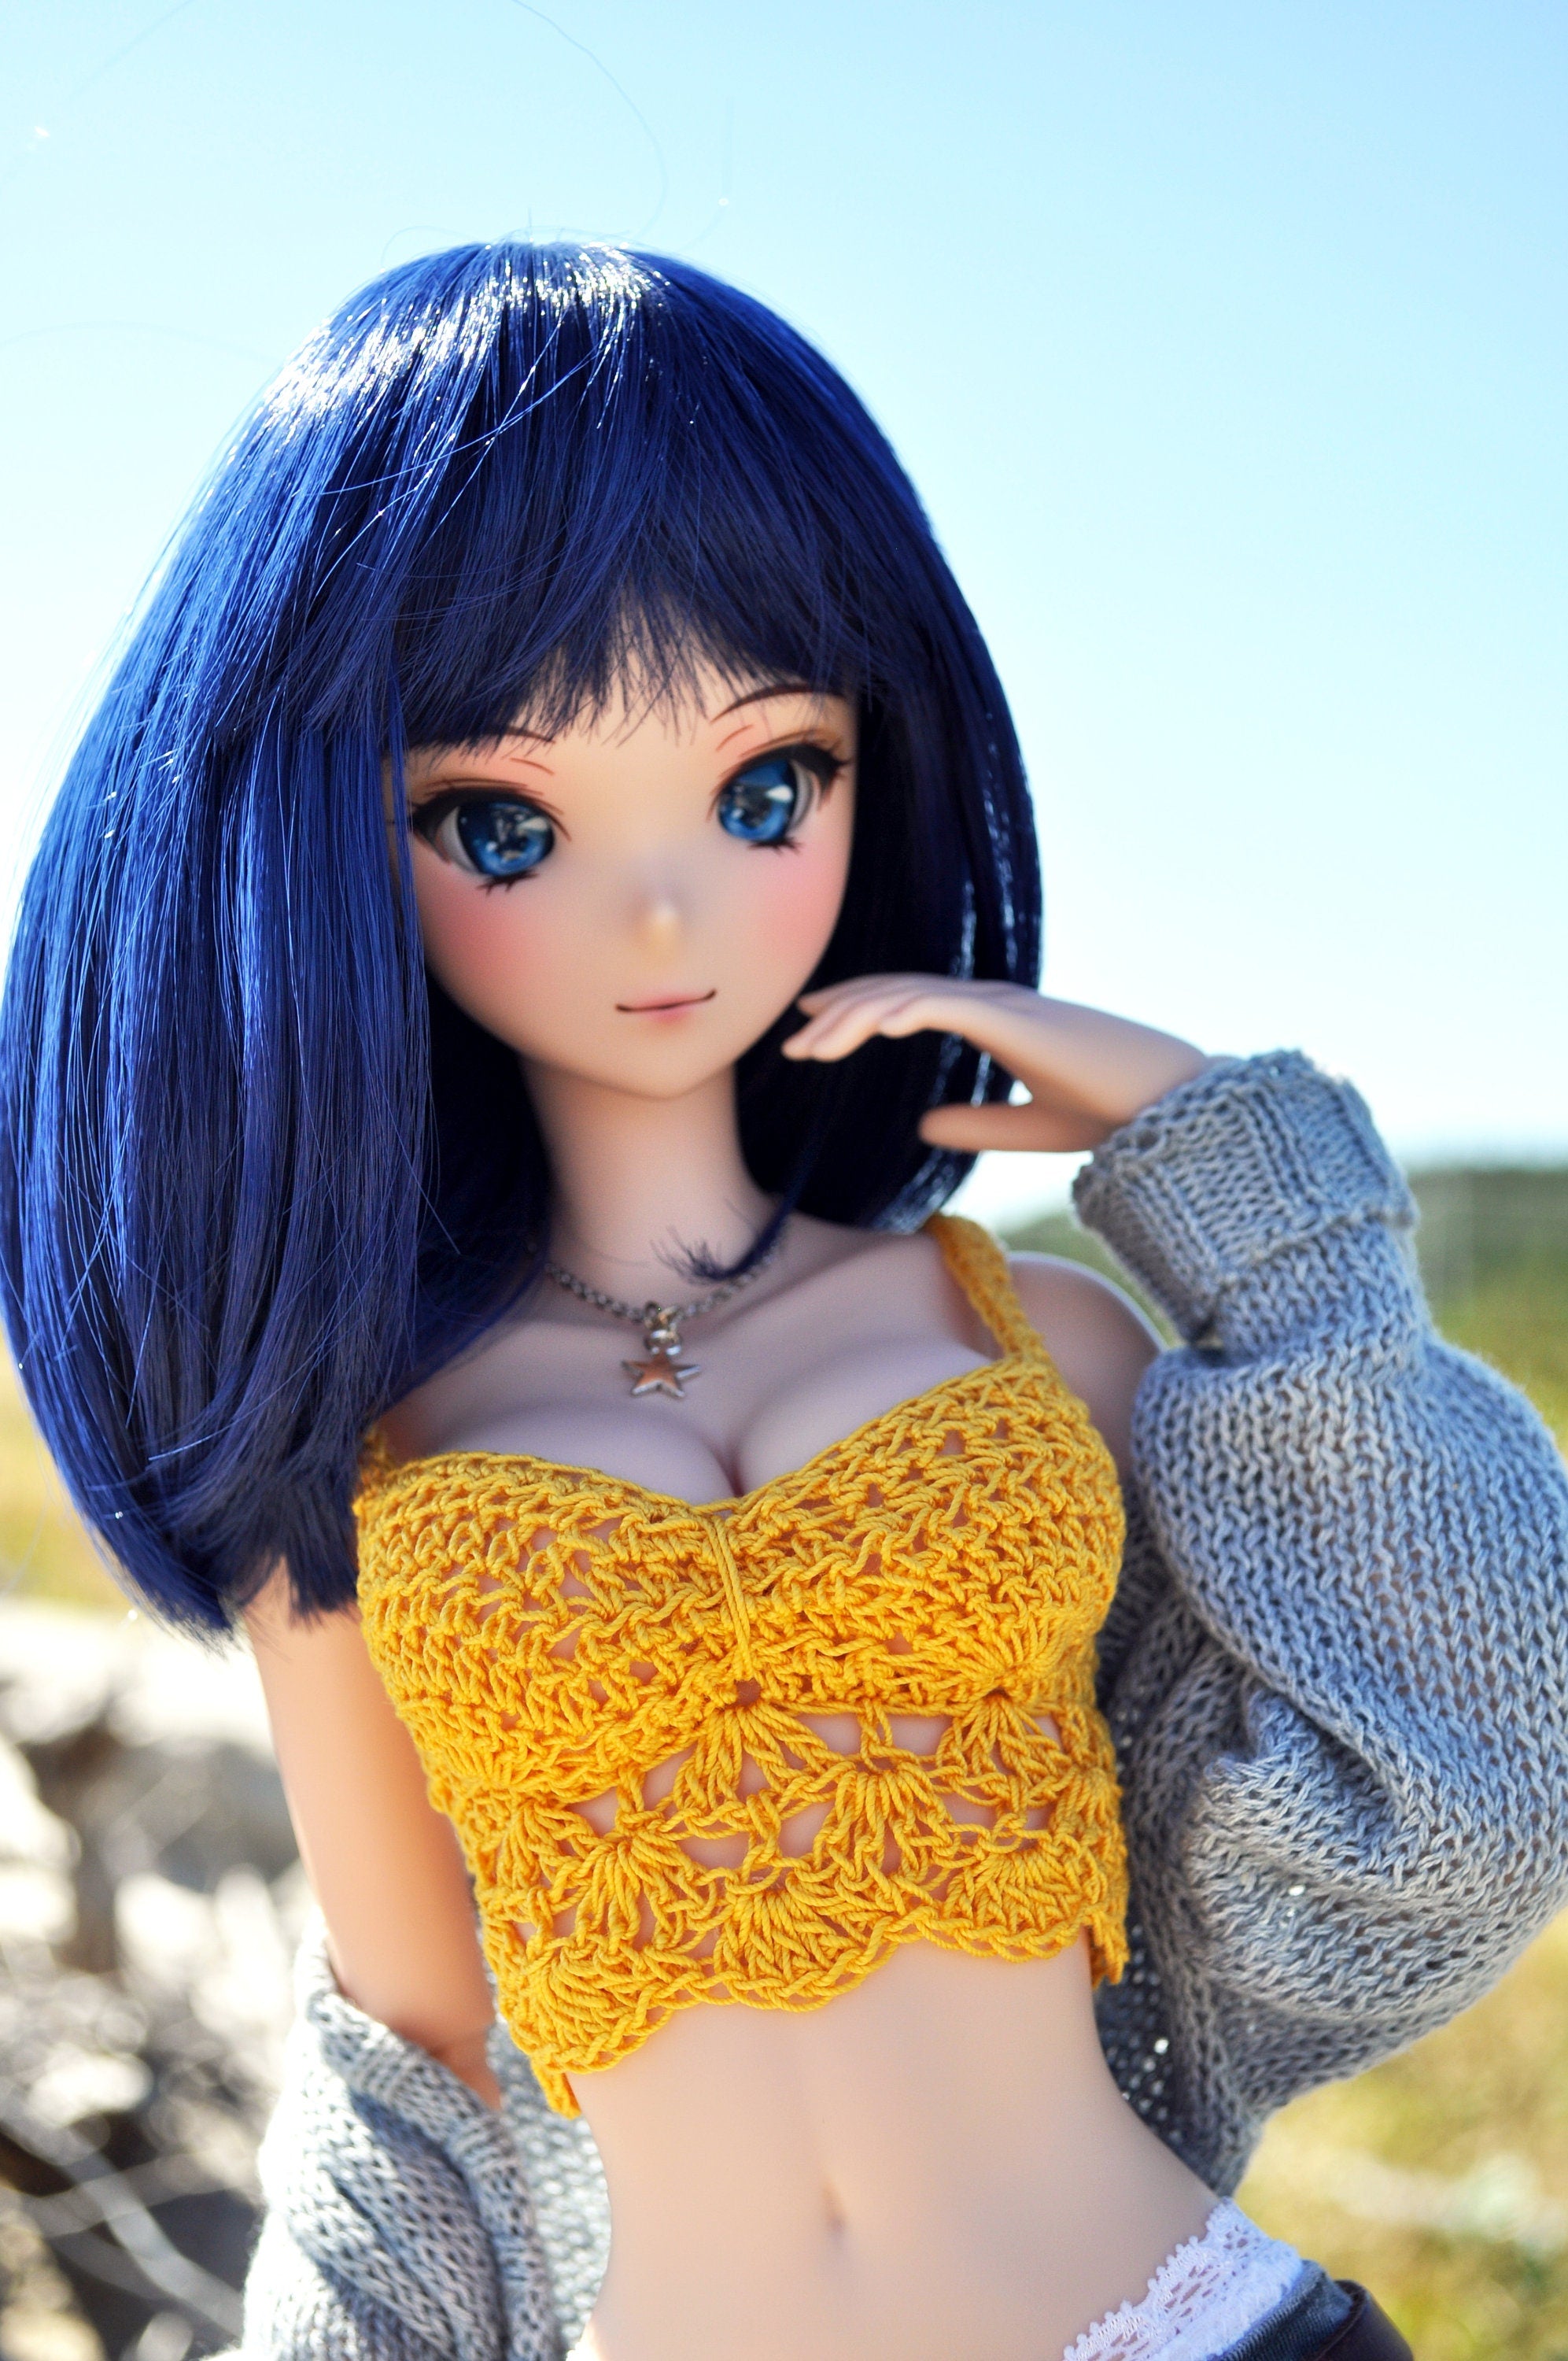 Custom doll WIG for Smart Dolls- Heat Safe - Tangle Resistant- 8.5" head size of Bjd, SD, Dollfie Dream dolls Blue